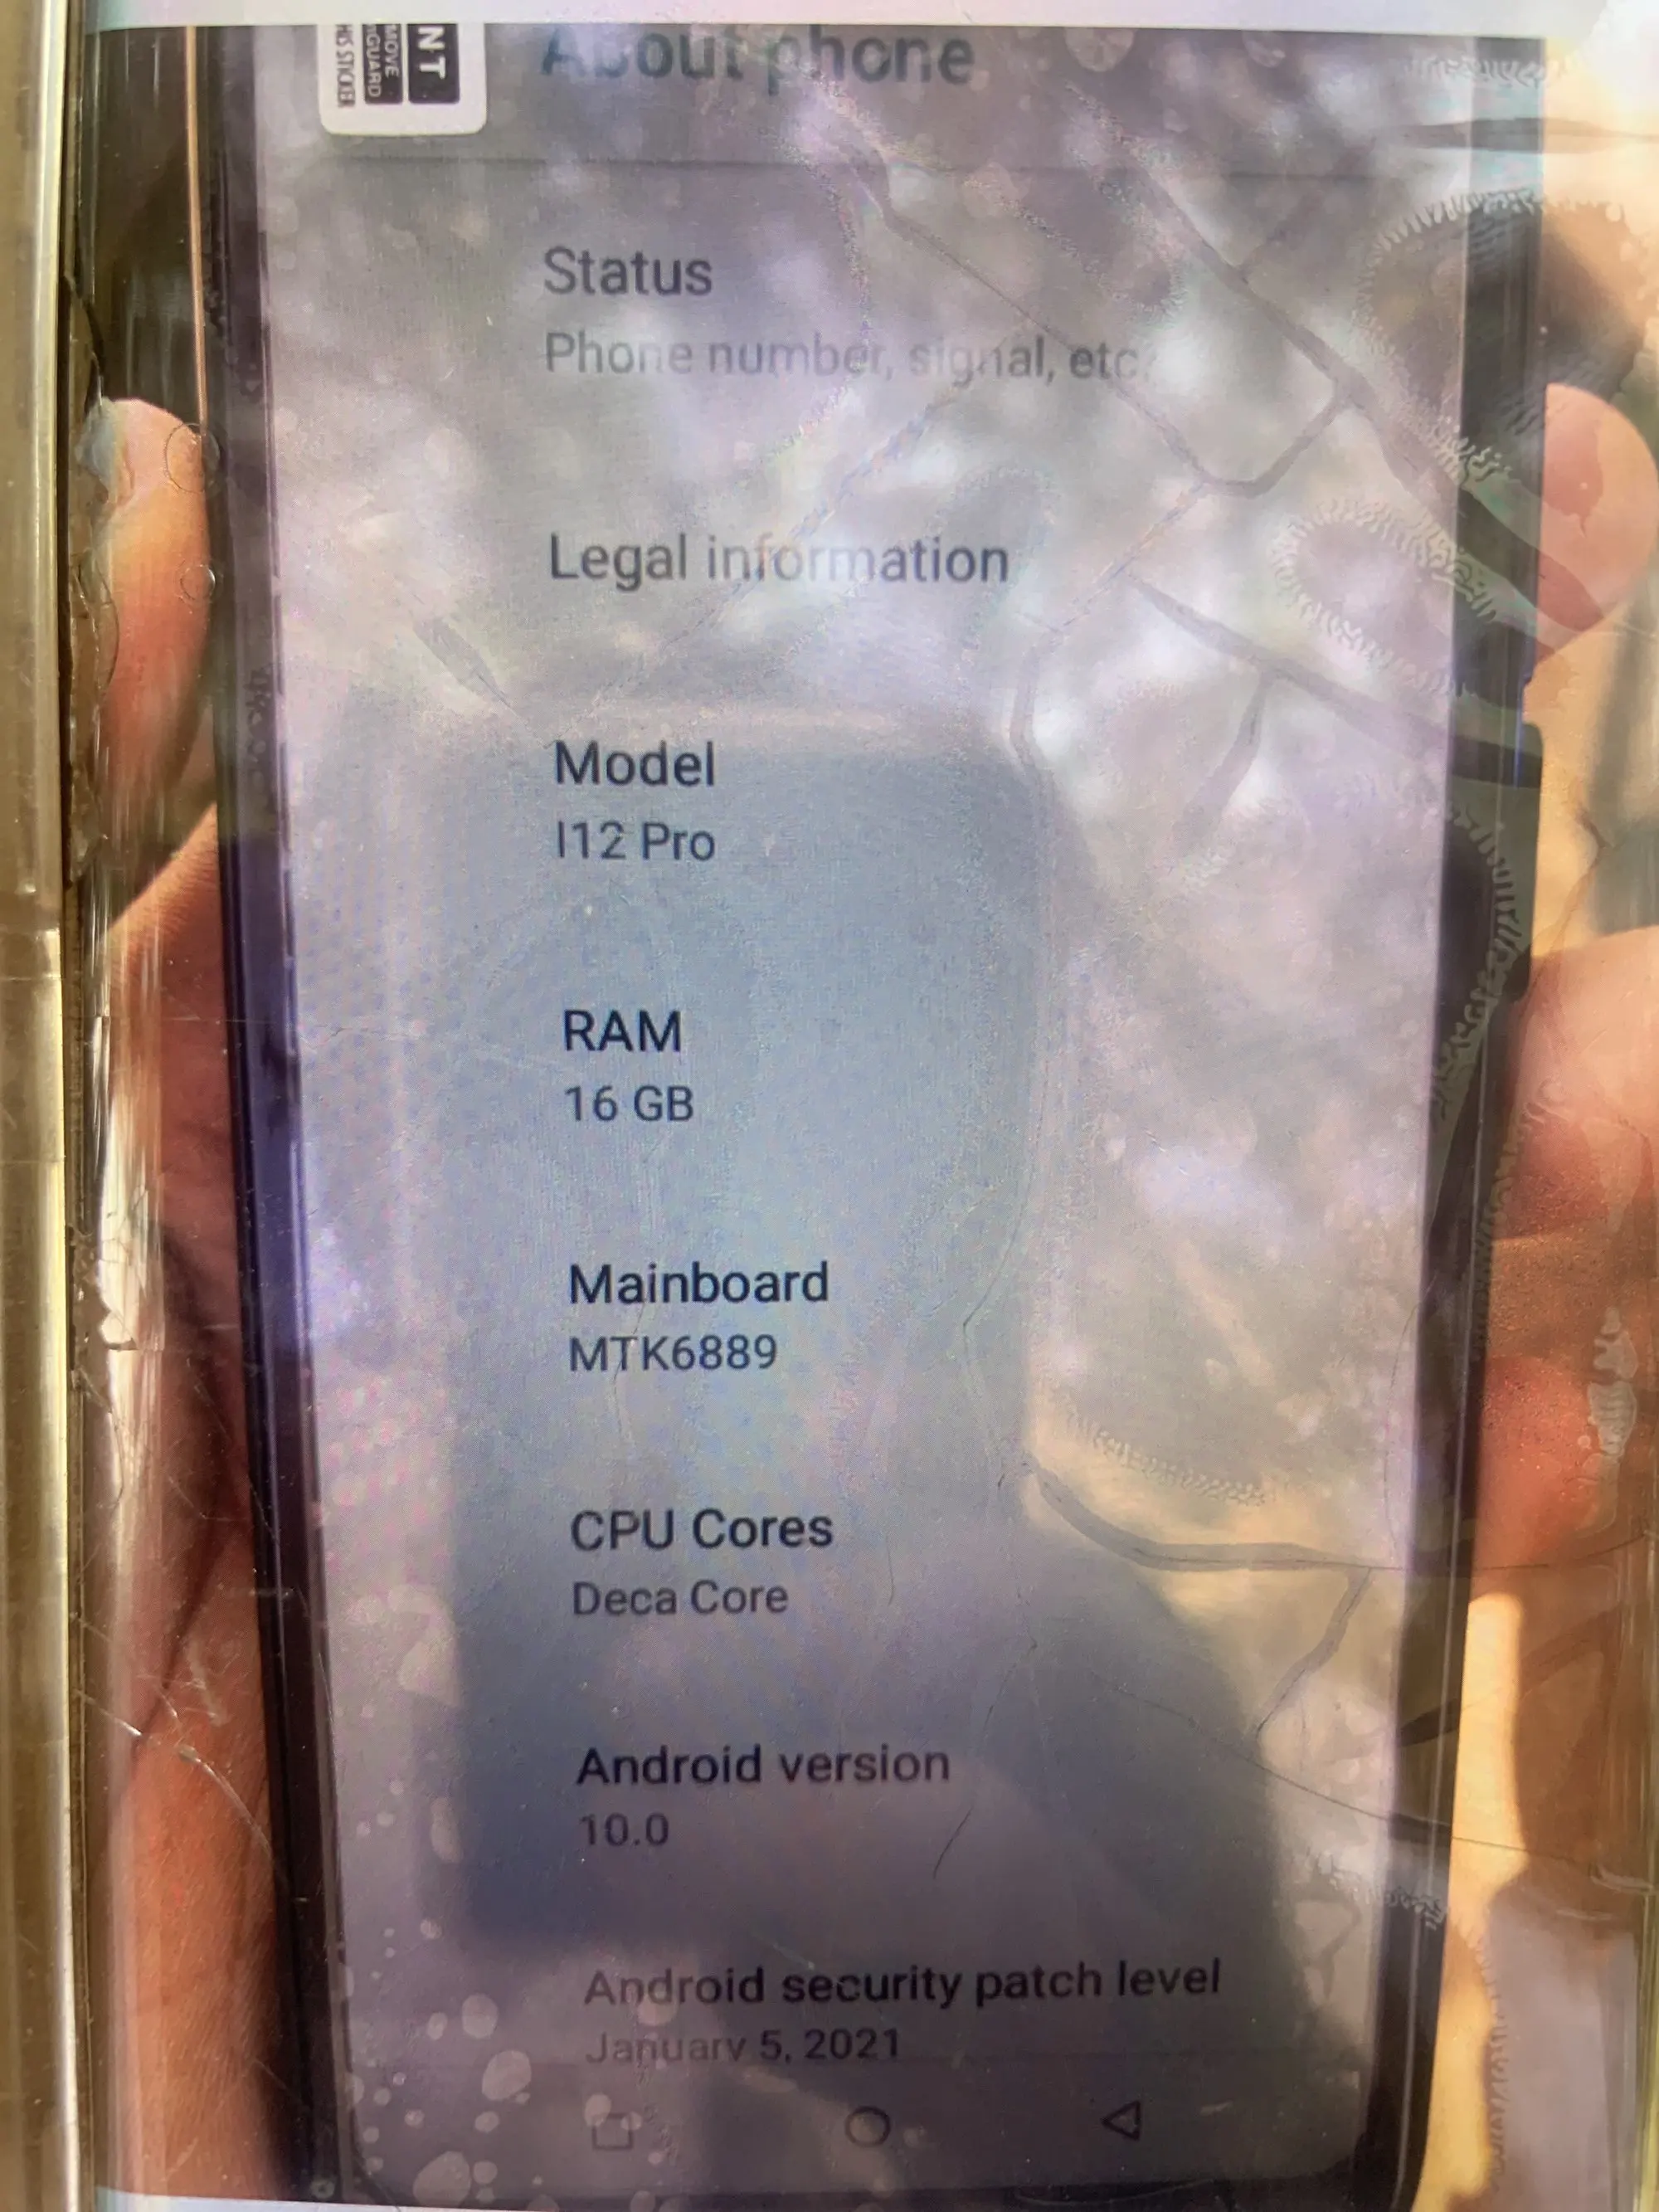  i13pro MAX(A61) Dual SIM/GPS/Face ID 5G Teléfonos móviles  ofrece pantalla de 6.7 pulgadas Android 11 Teléfonos celulares baratos y  buenos de diez núcleos cuatro cámaras con teléfono inteligente AI, oro 